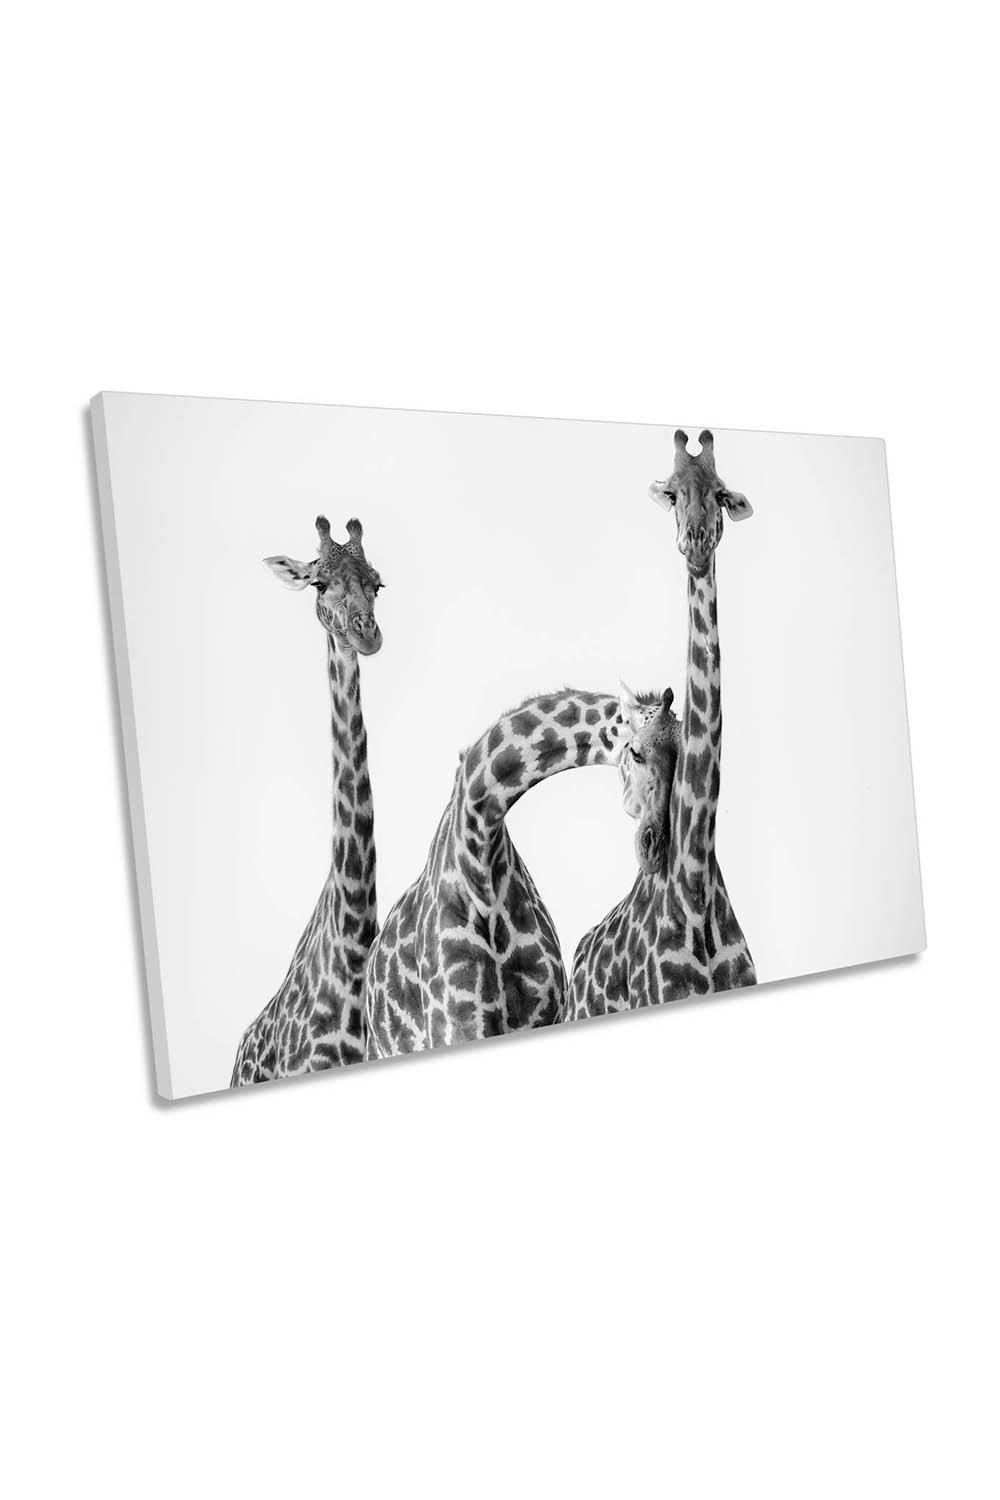 Giraffe Family Love Wildlife Canvas Wall Art Picture Print